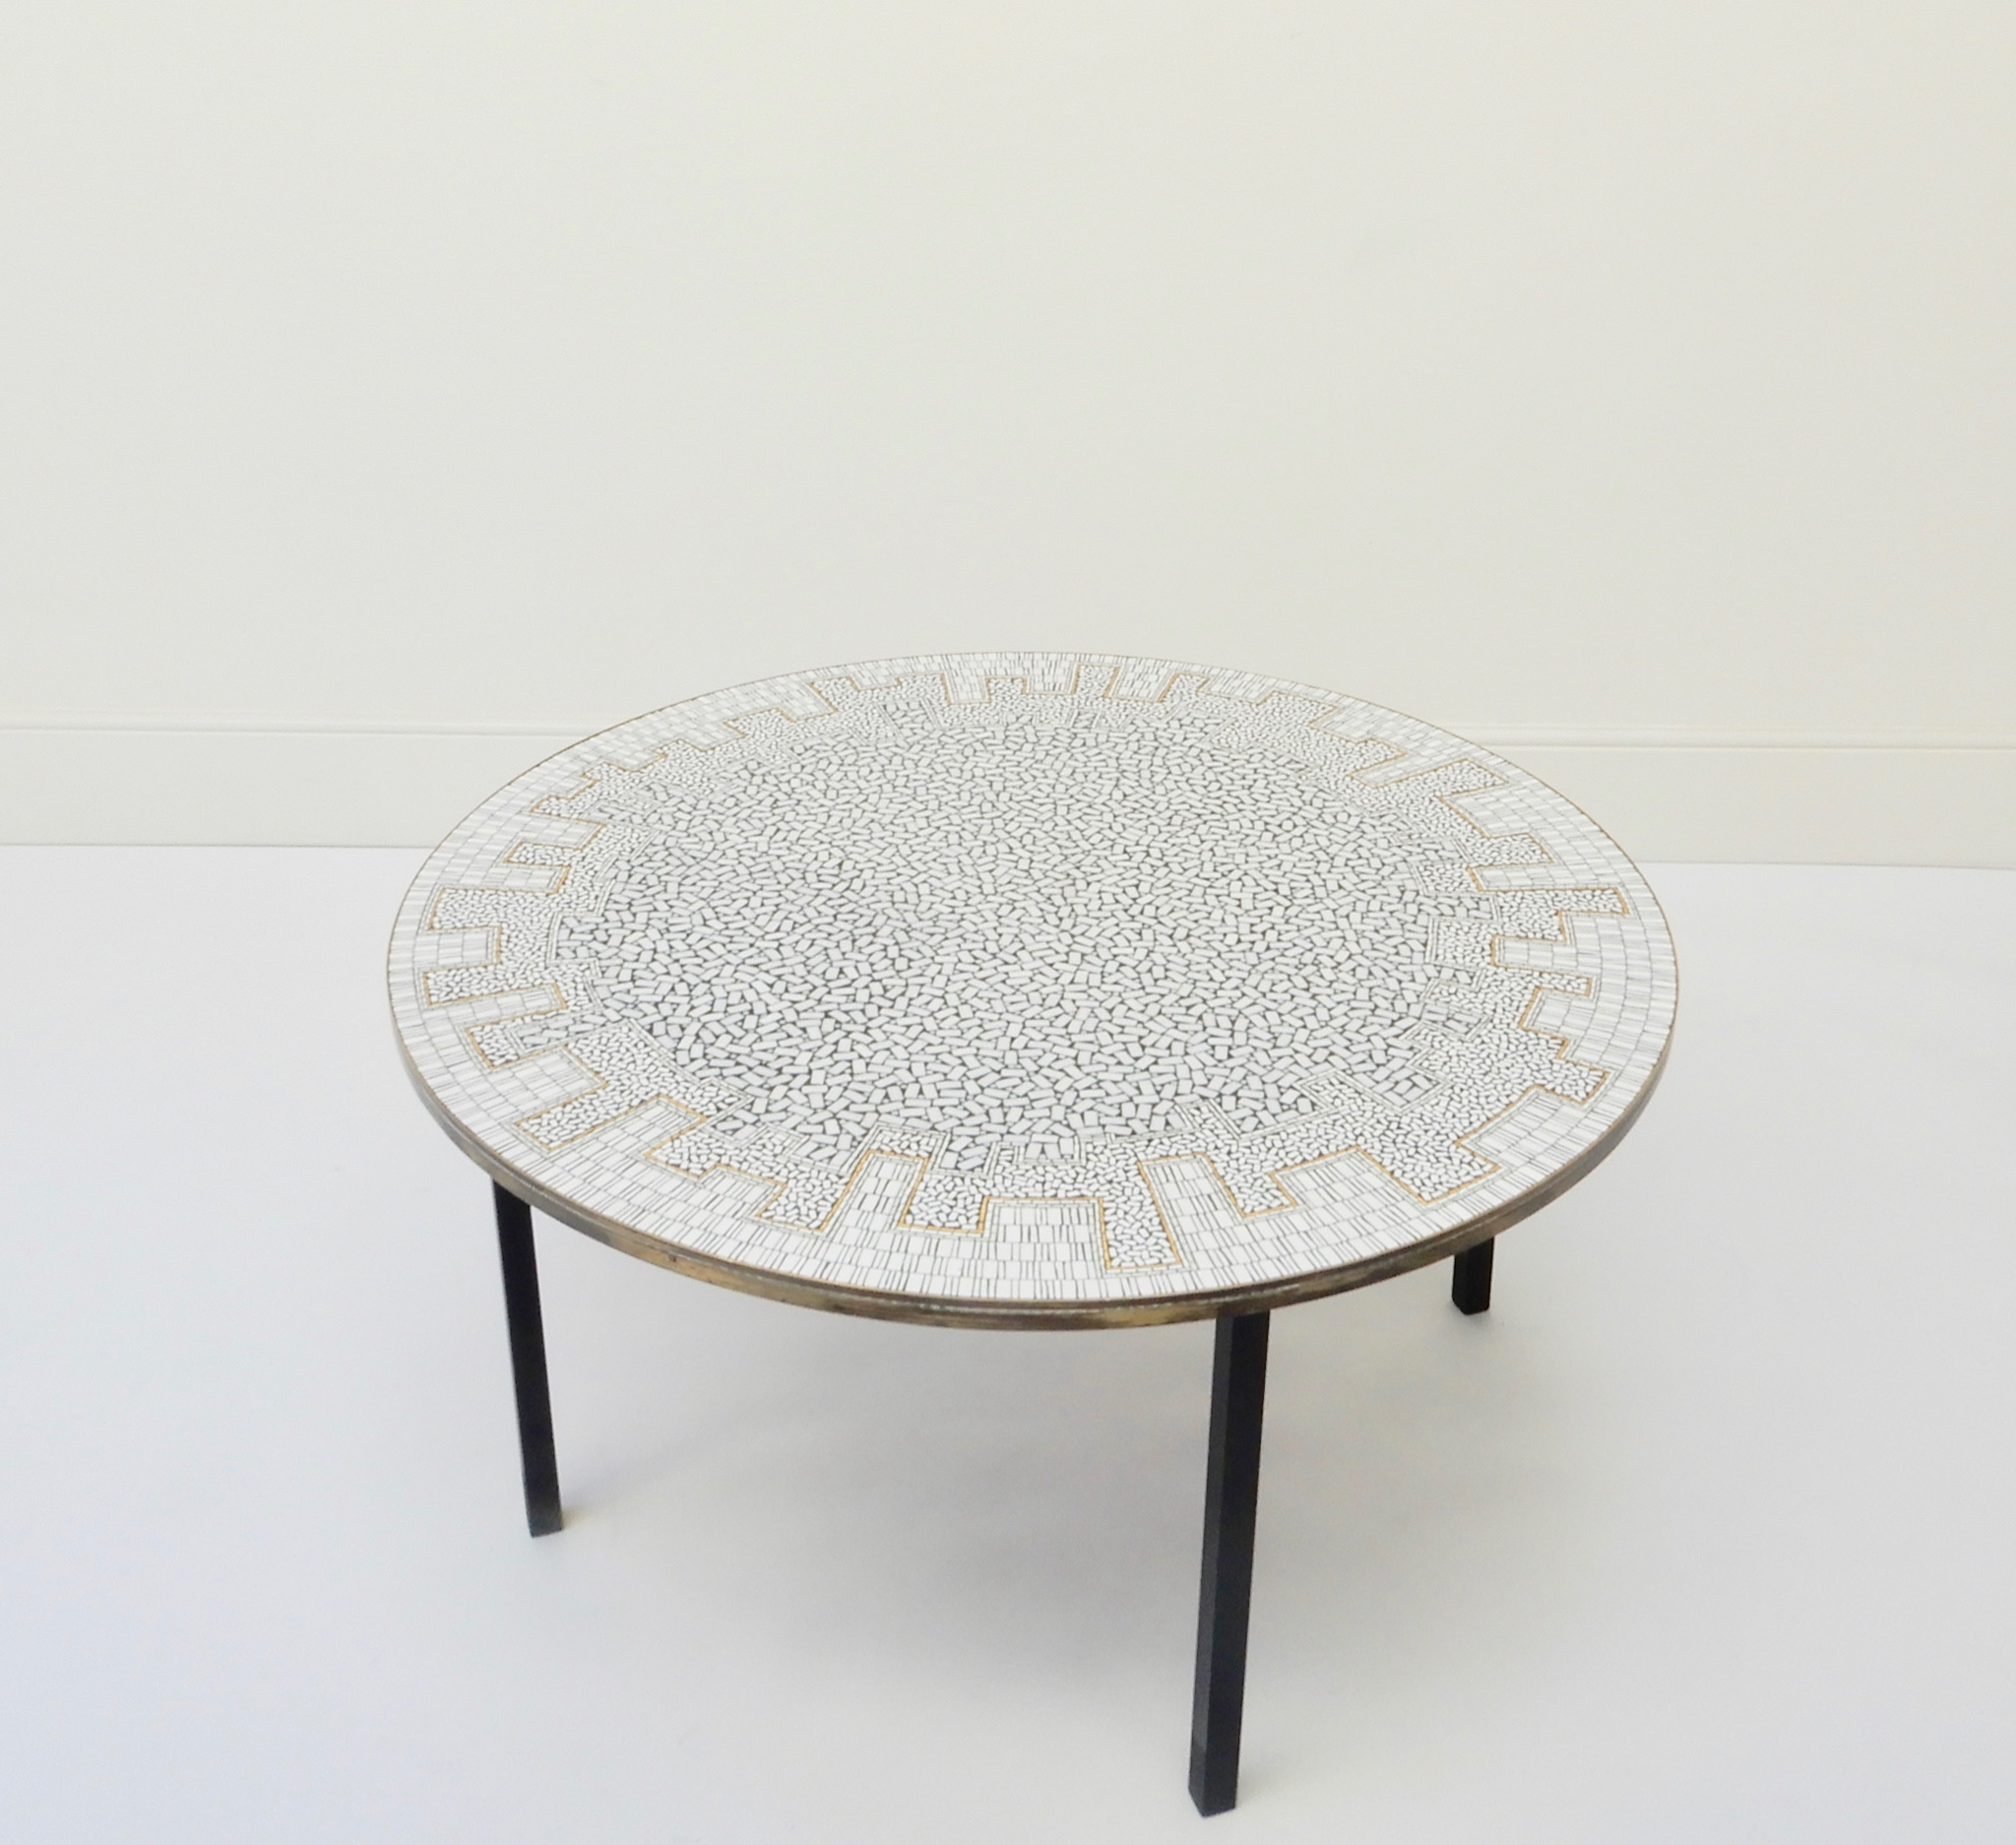 Sold-Circular Ceramic Tiled Coffee Table